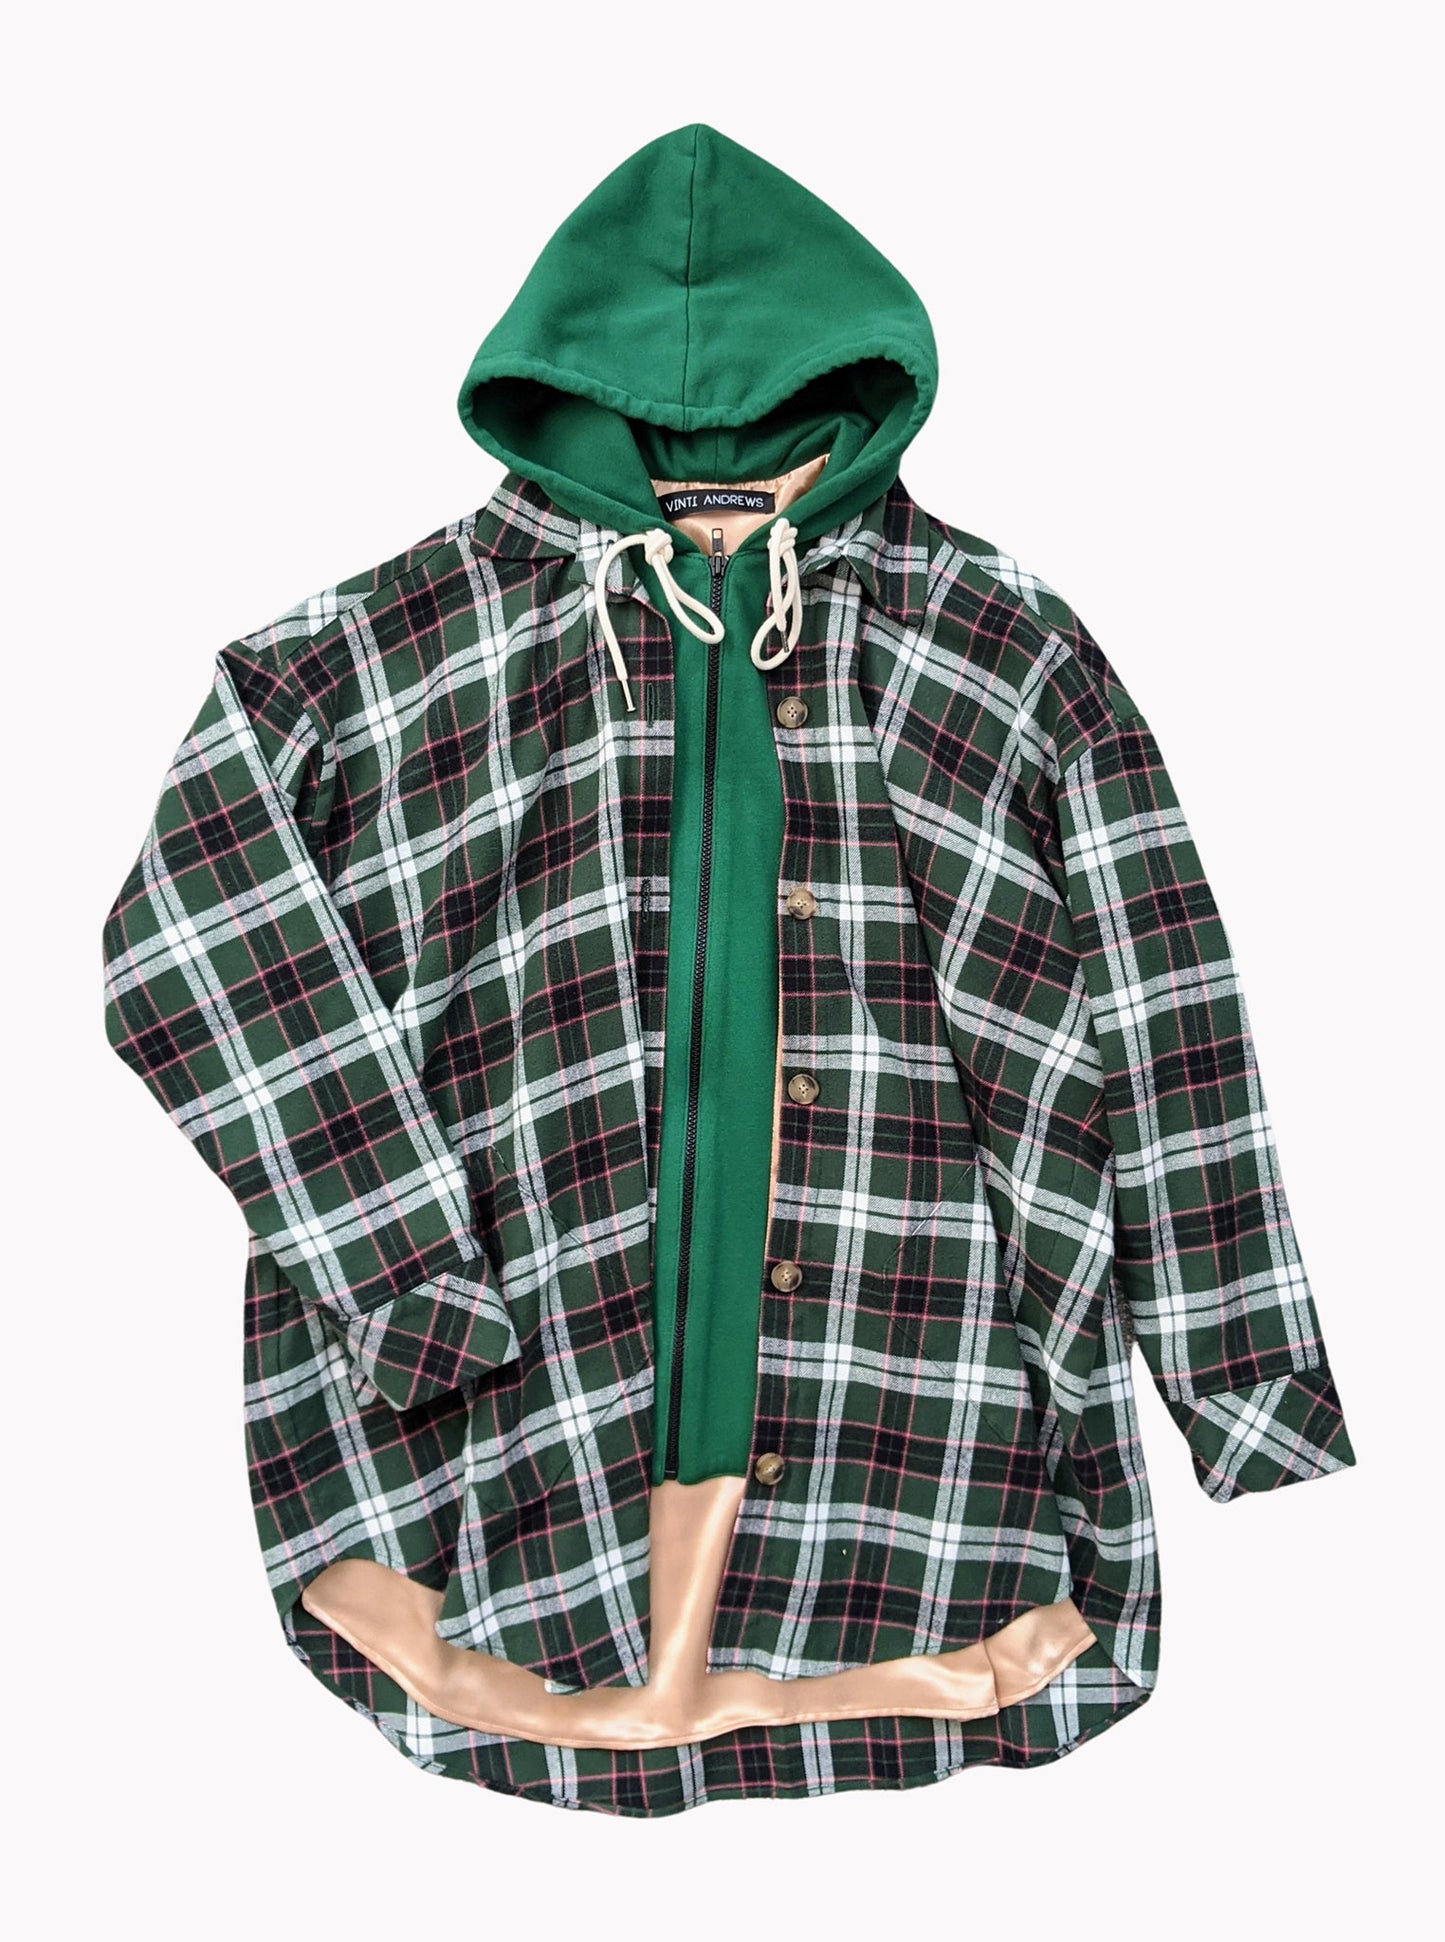 Oversize Shirt Jacket with Hood Green Plaid